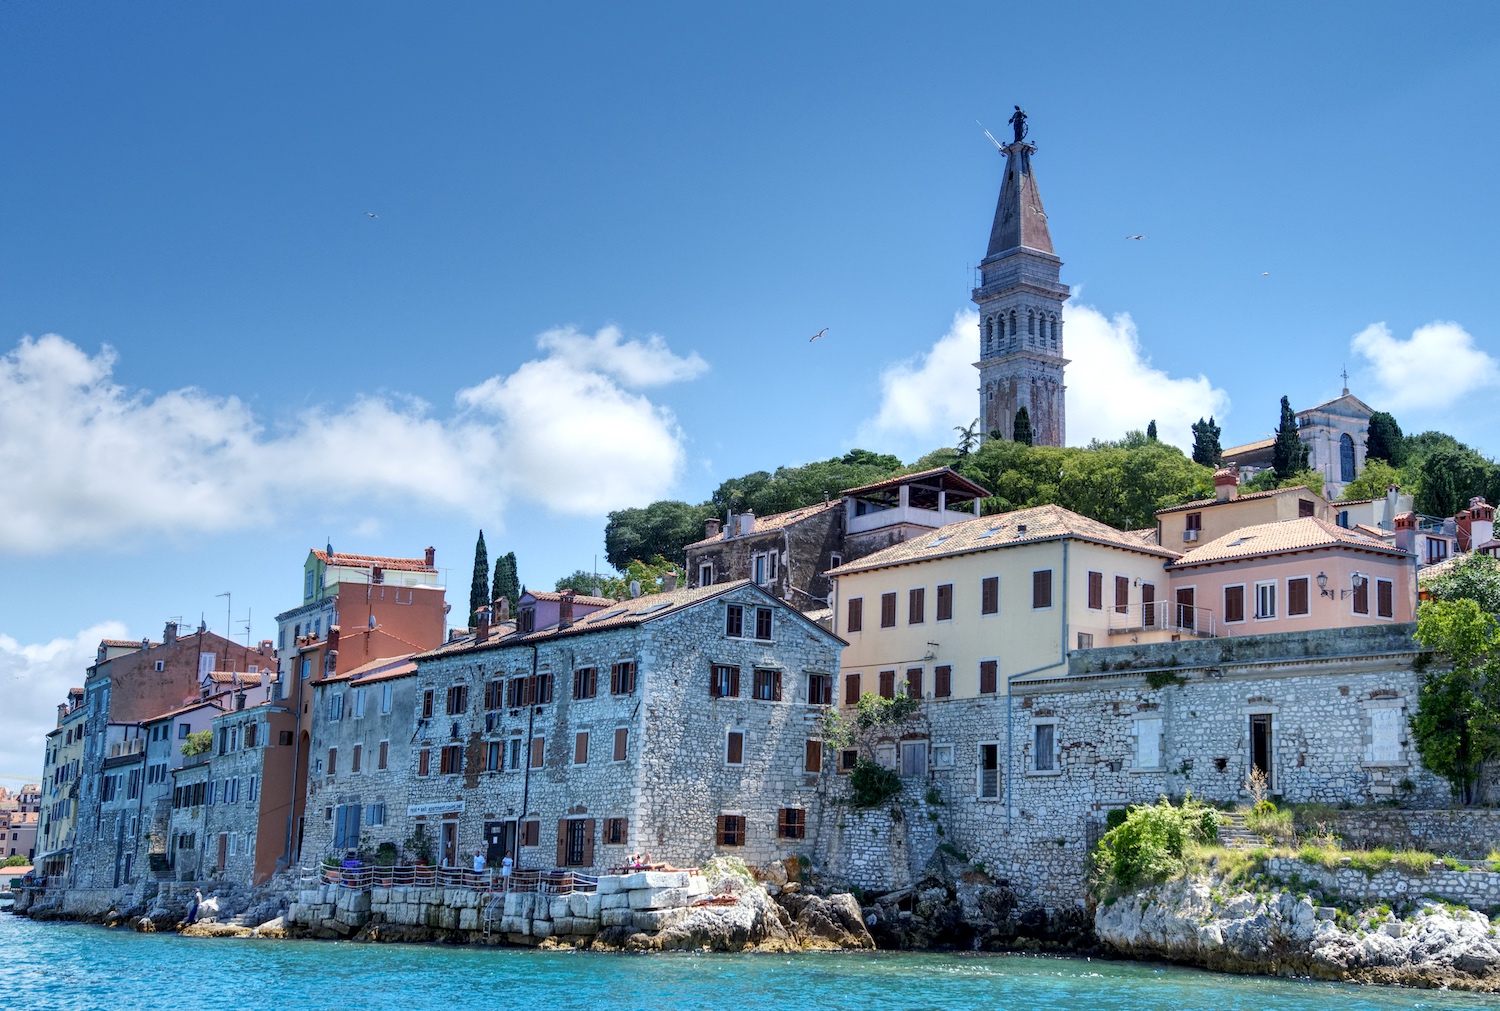 Travelling the Croatian Adriatic coast by motorhome